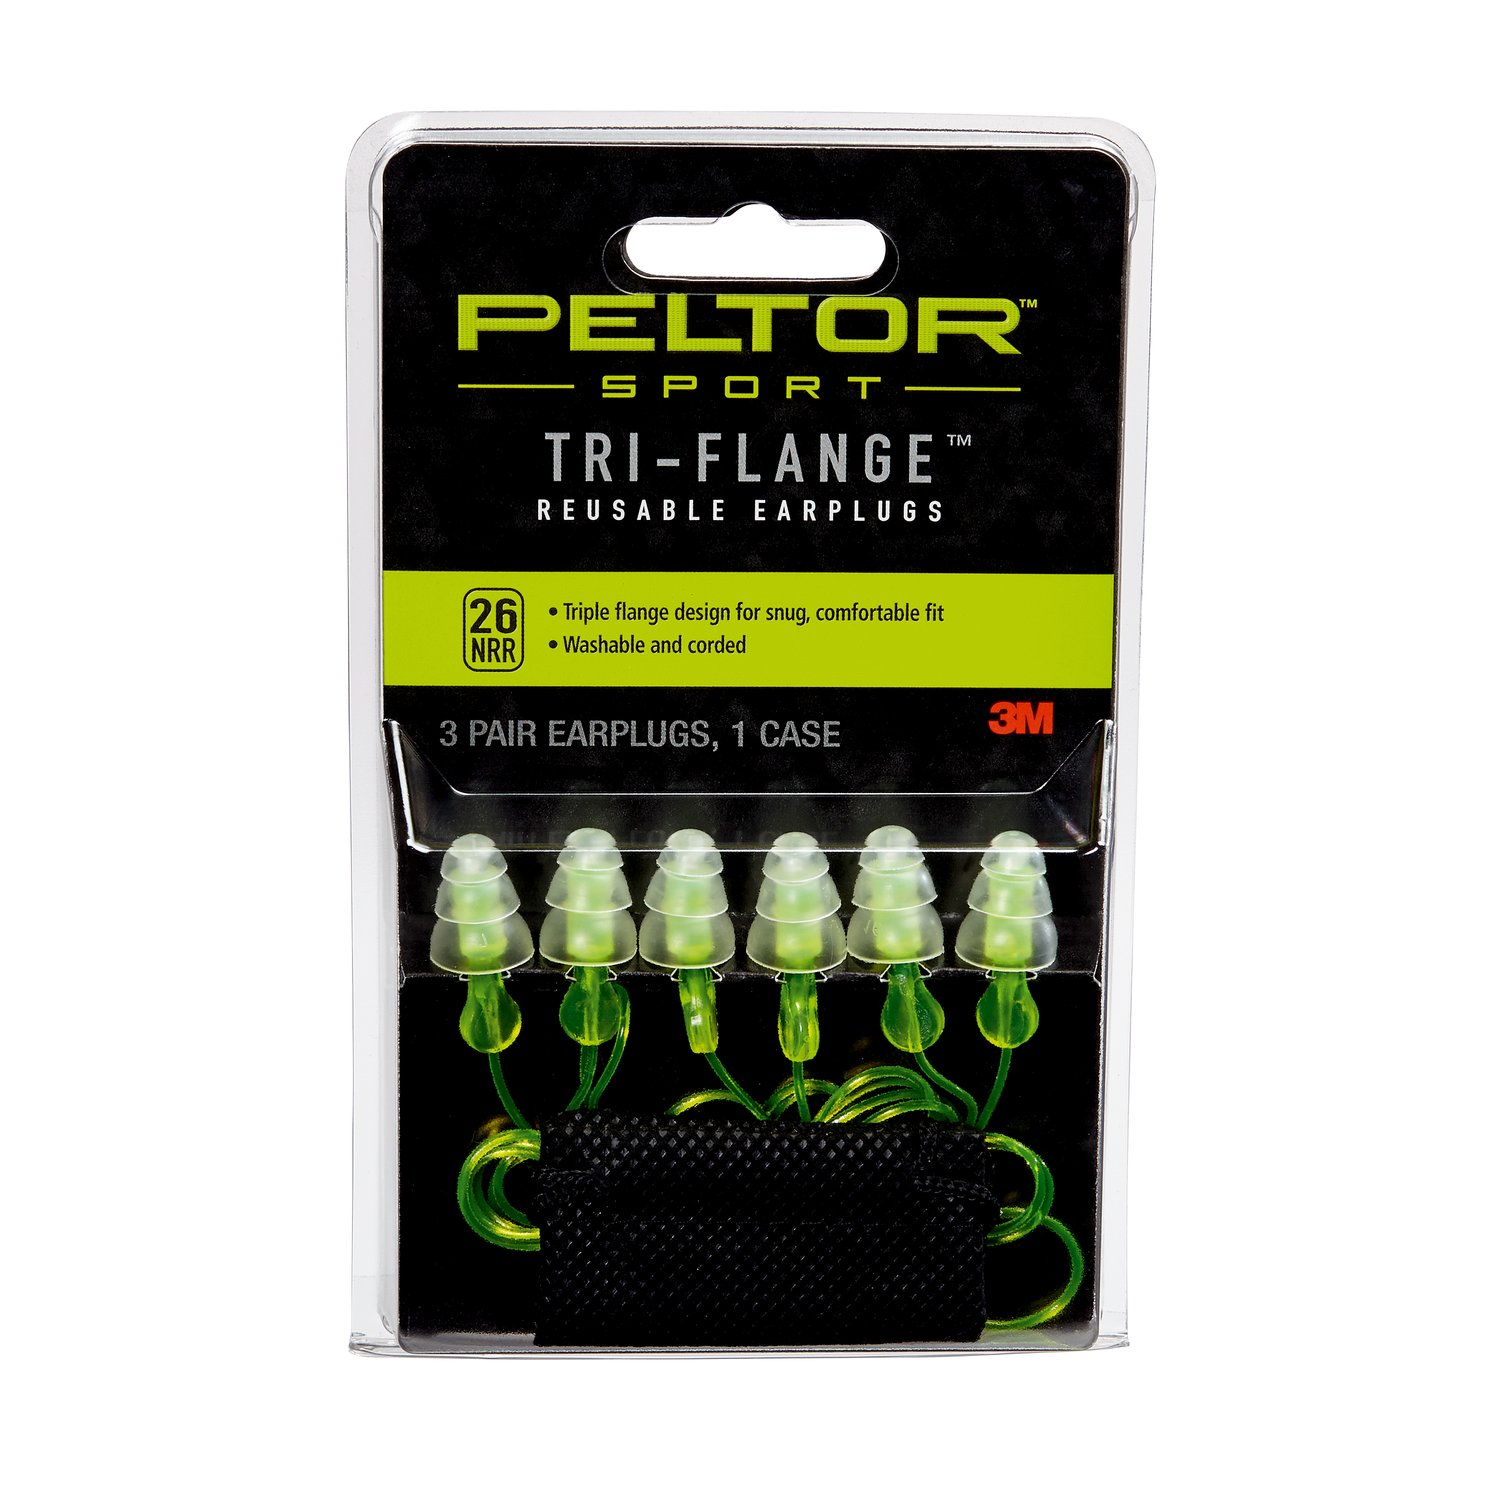 7100173331 - Peltor Sport Tri-Flange Corded Reusable Earplugs 97317-10DC, 3 Pair
Pack Neon Yellow